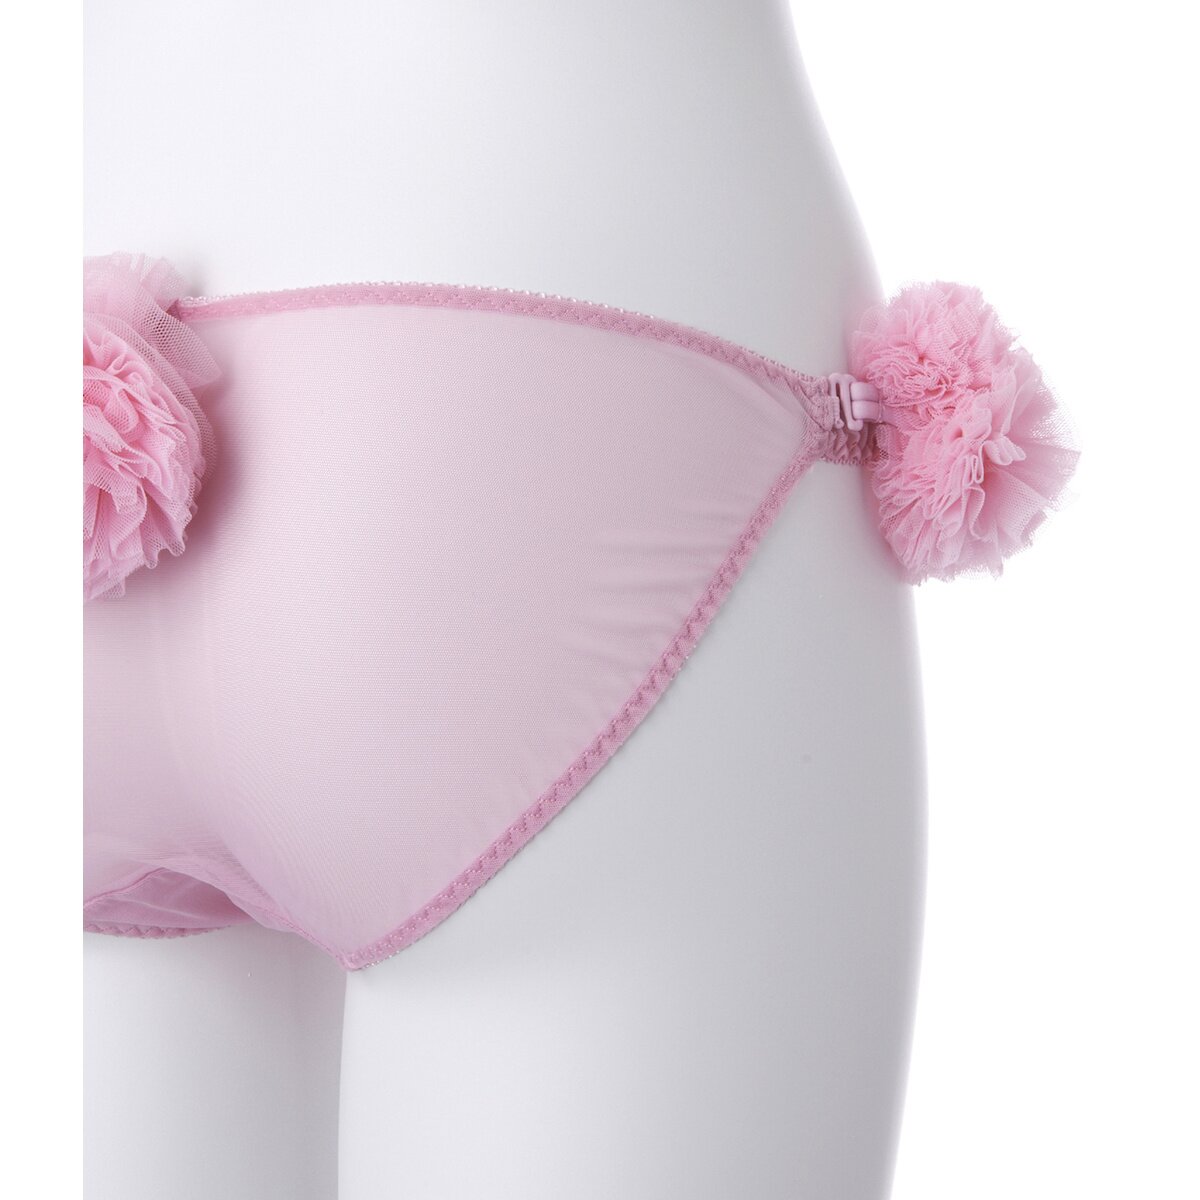 Pink Poodles Underwear – Pitter Patter